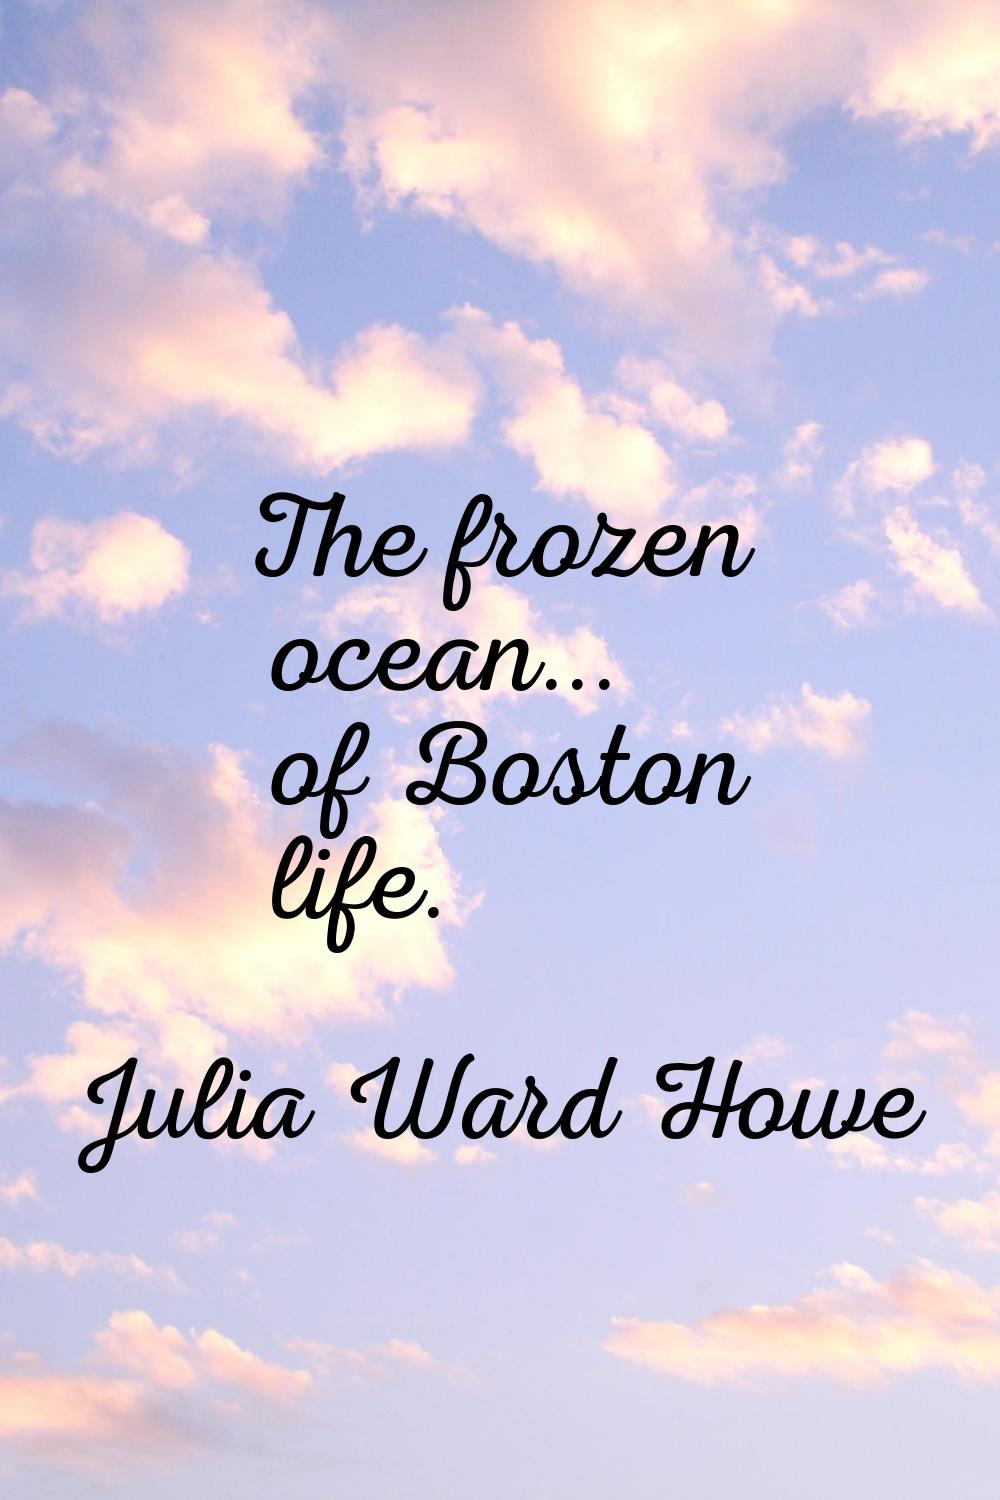 The frozen ocean... of Boston life.